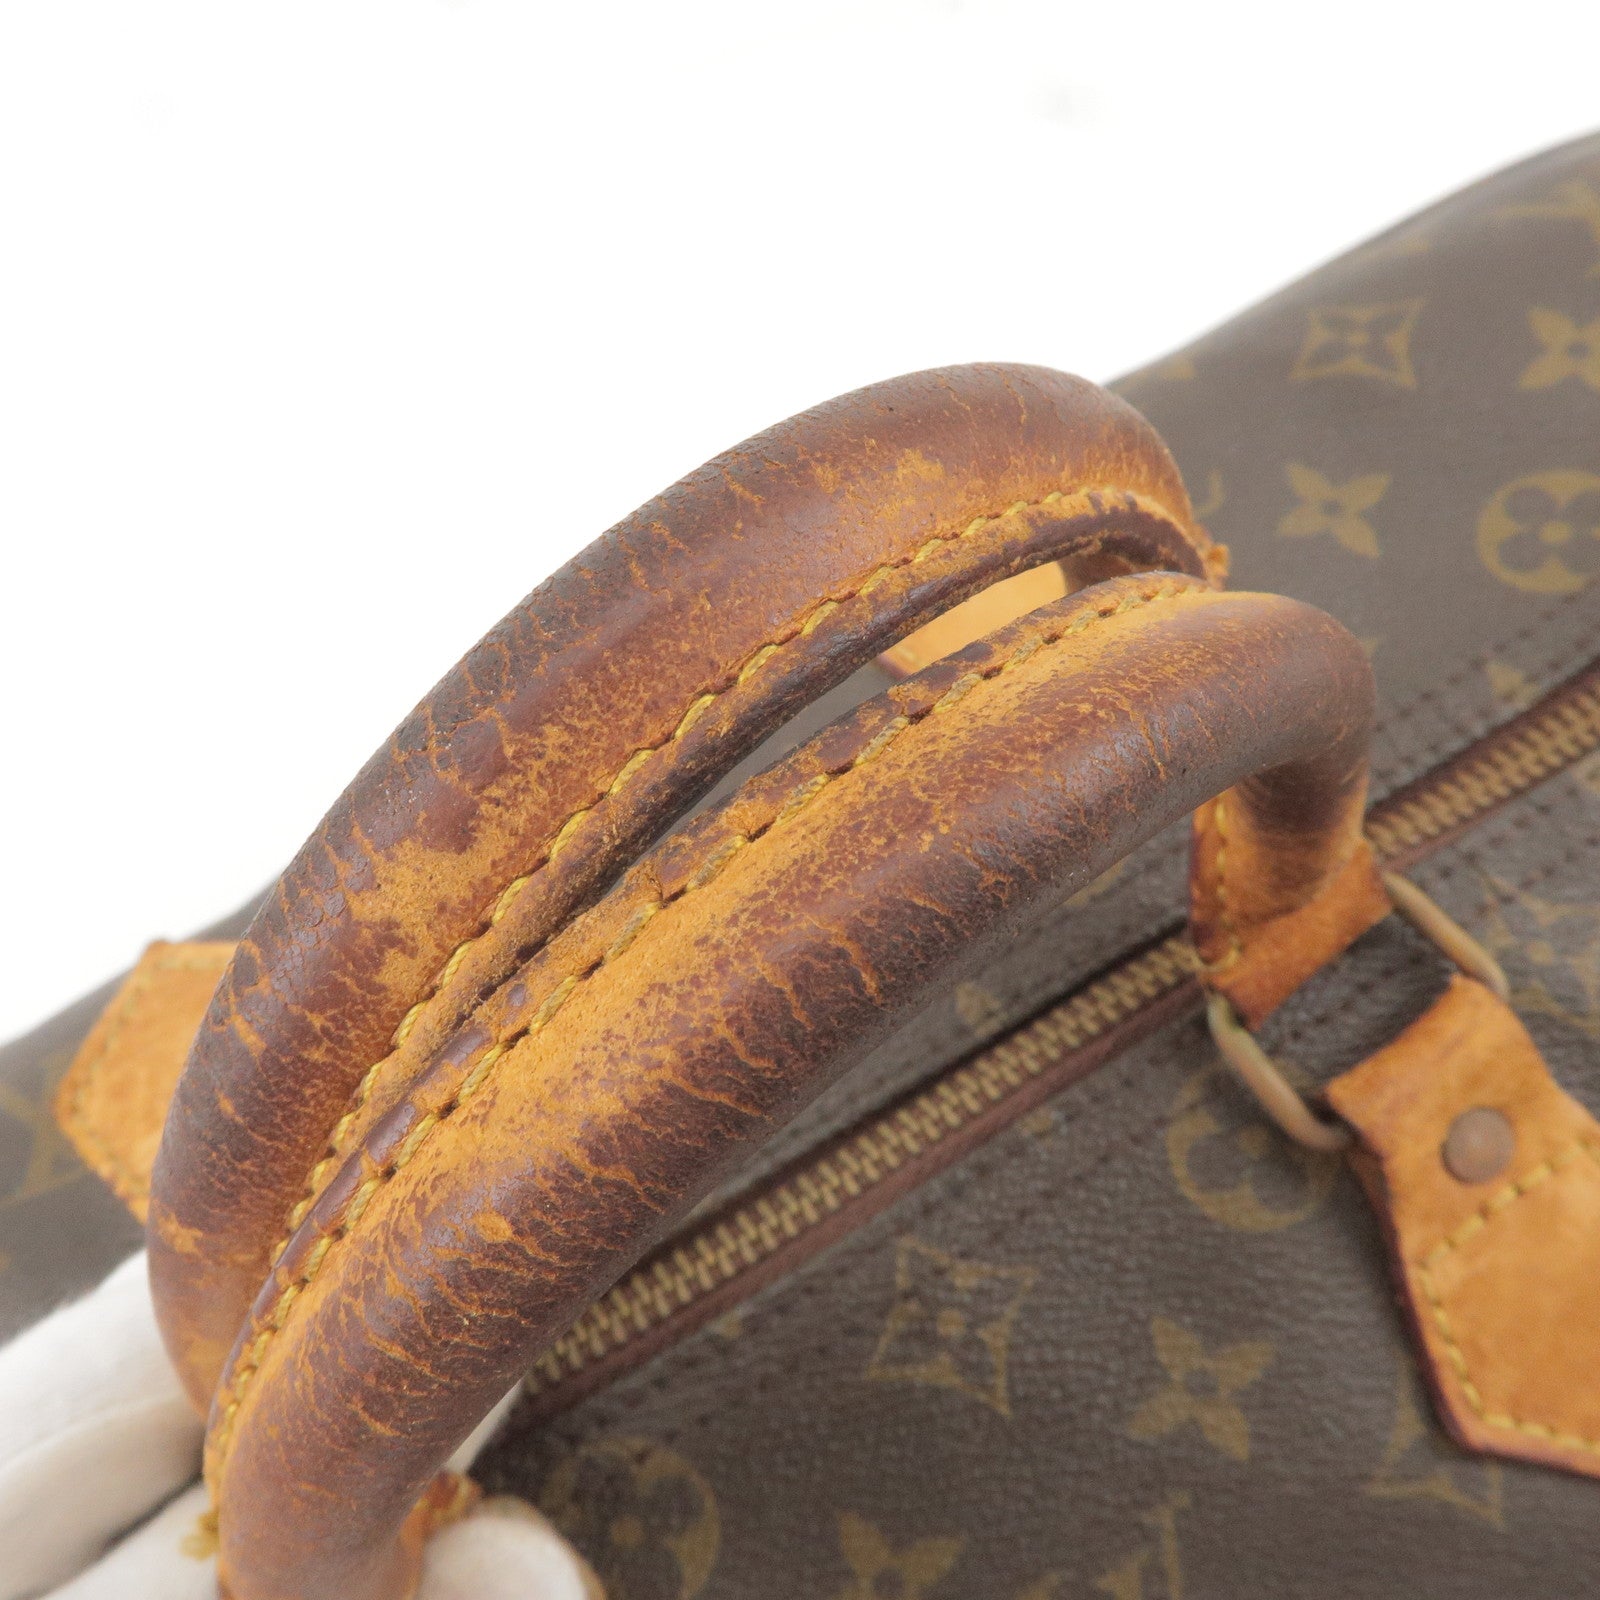 LOUIS VUITTON Handbag M41522 Speedy 40 Monogram canvas/Leather